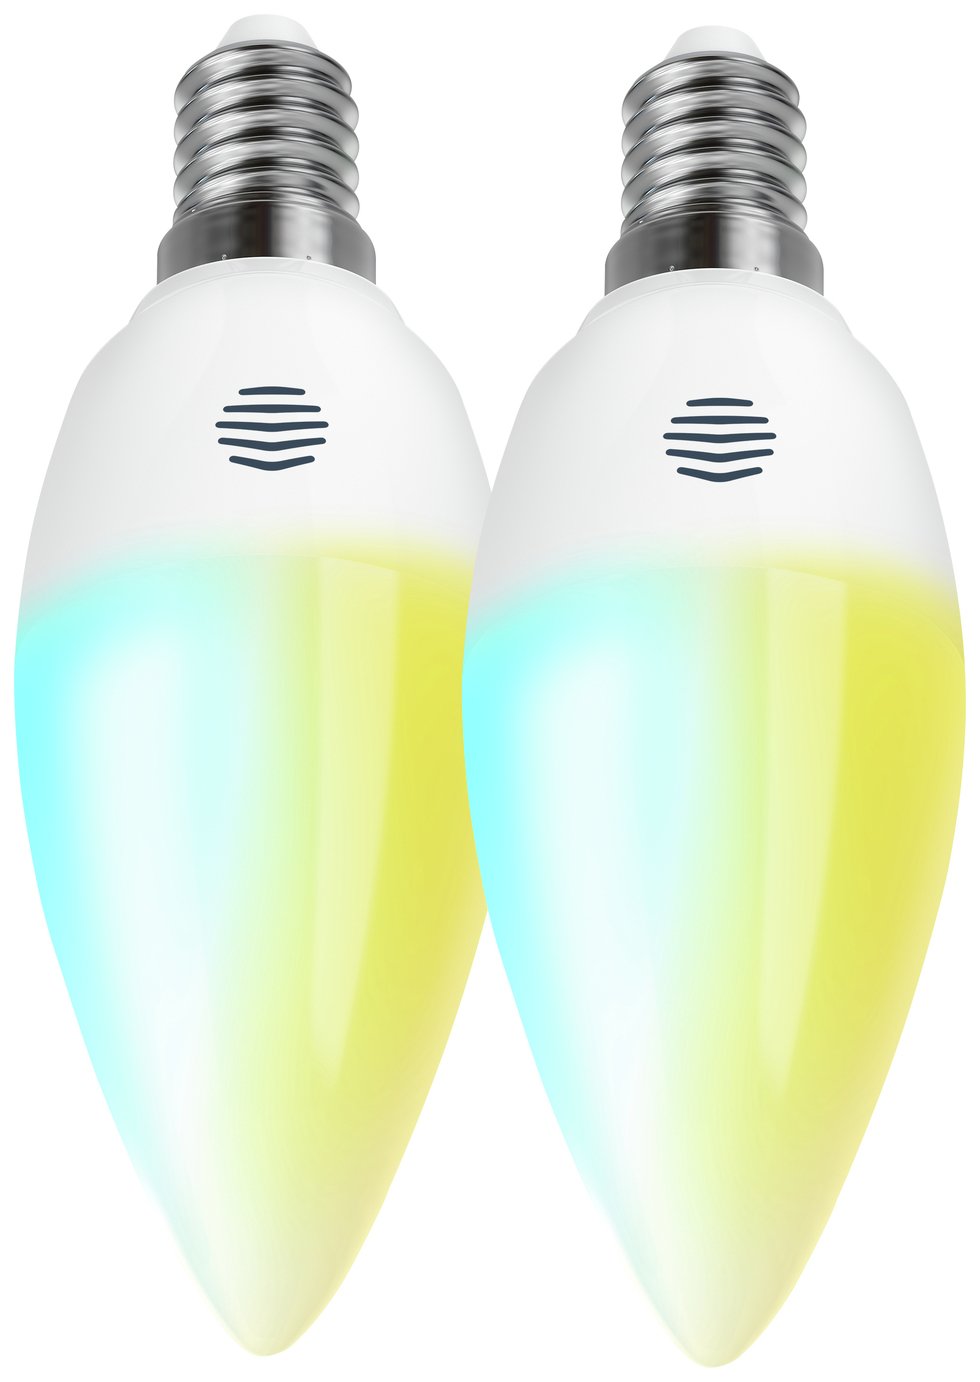 Hive Light Cool to Warm White Smart E14 Bulb review